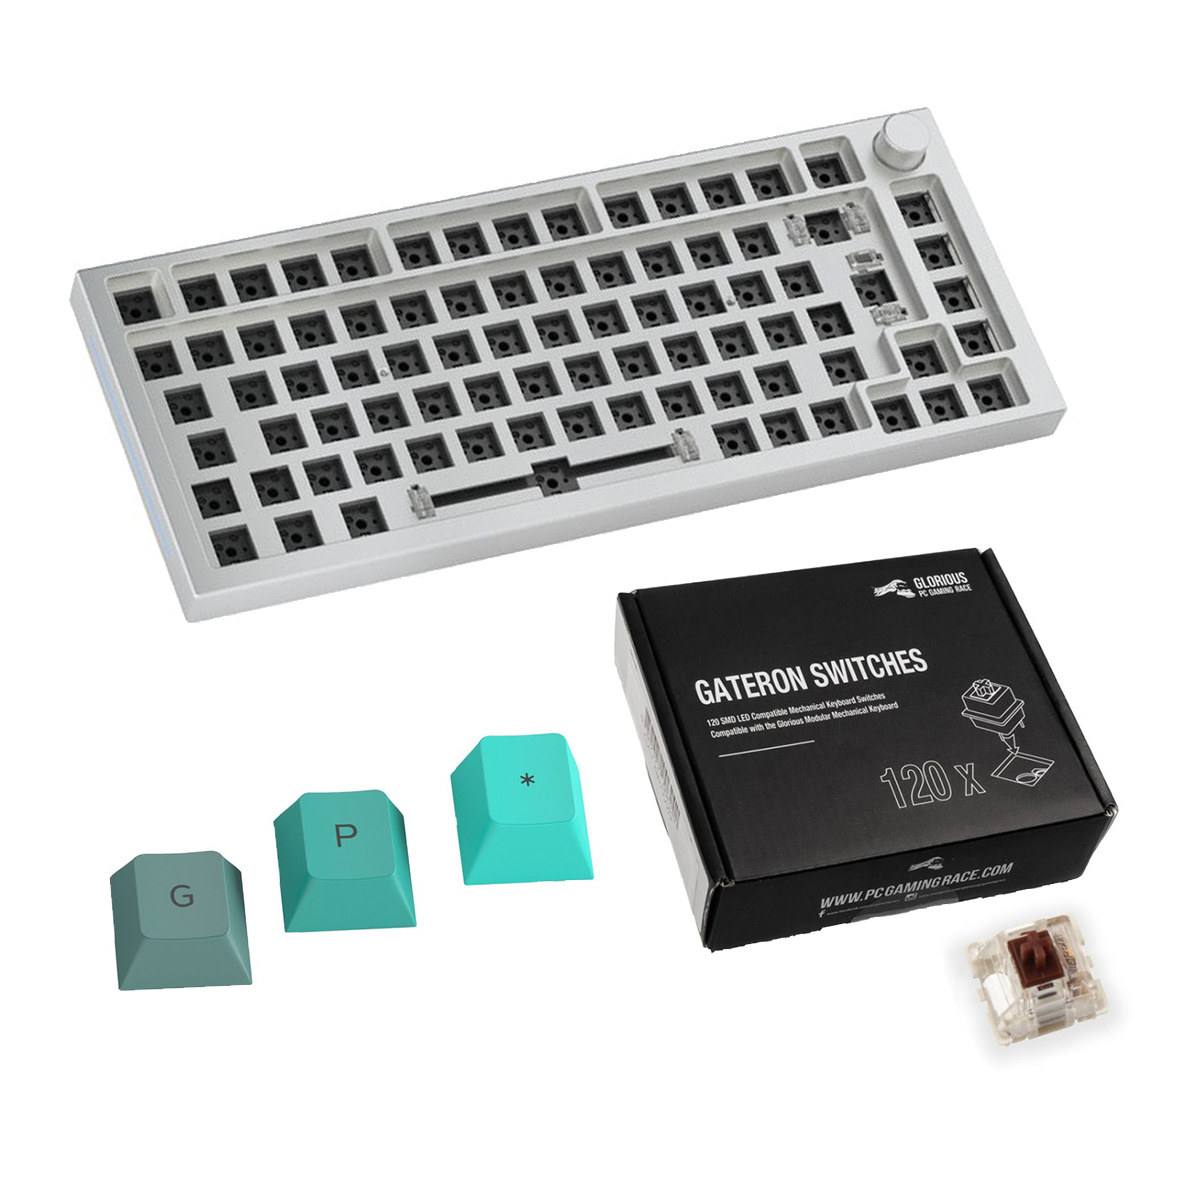 Glorious - Glorious GMMK Pro 75% Gaming Keyboard Epic Discount Bundle - White Frame